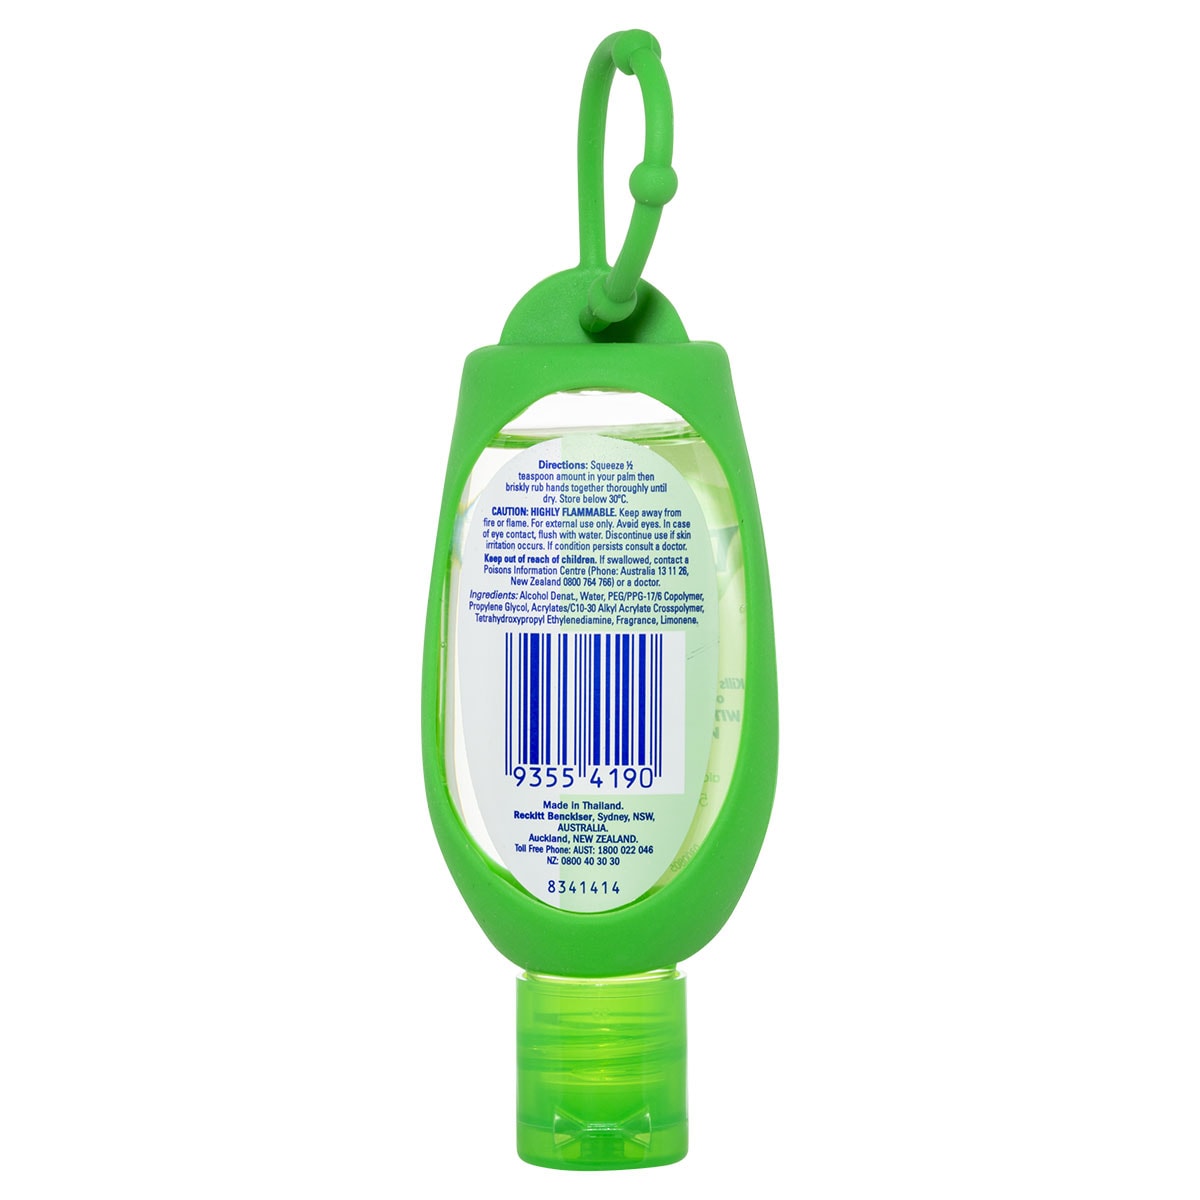 Dettol Instant Hand Sanitiser Refresh with Green Clip 50ml